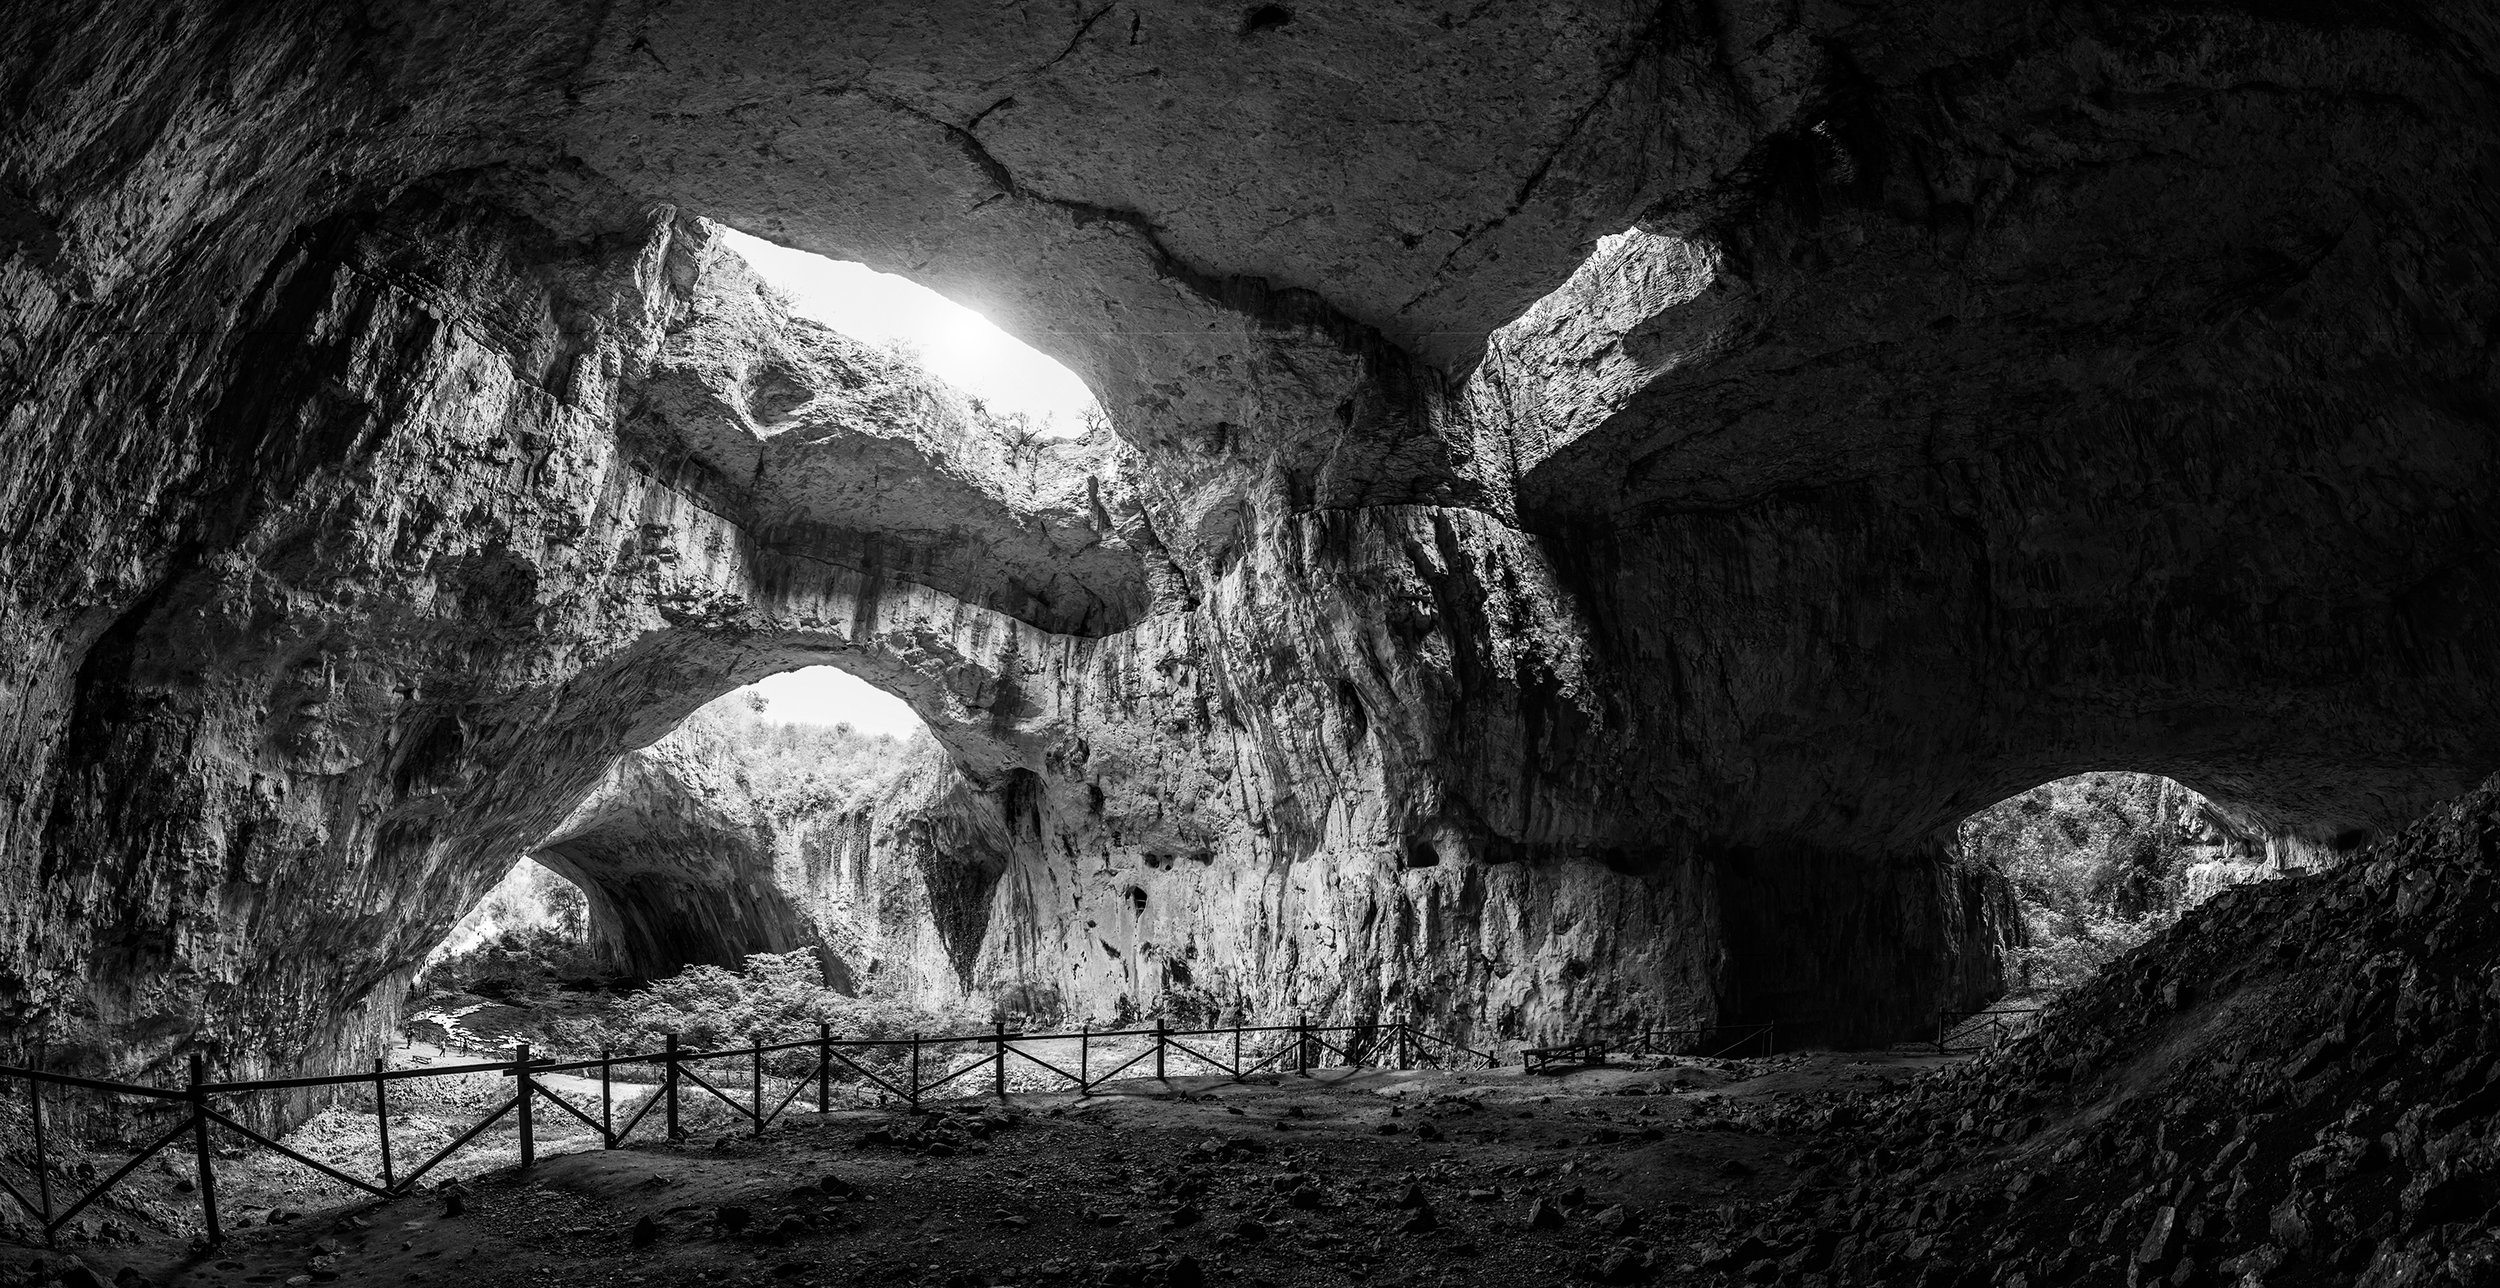 The Devetashka Cave in Bulgaria